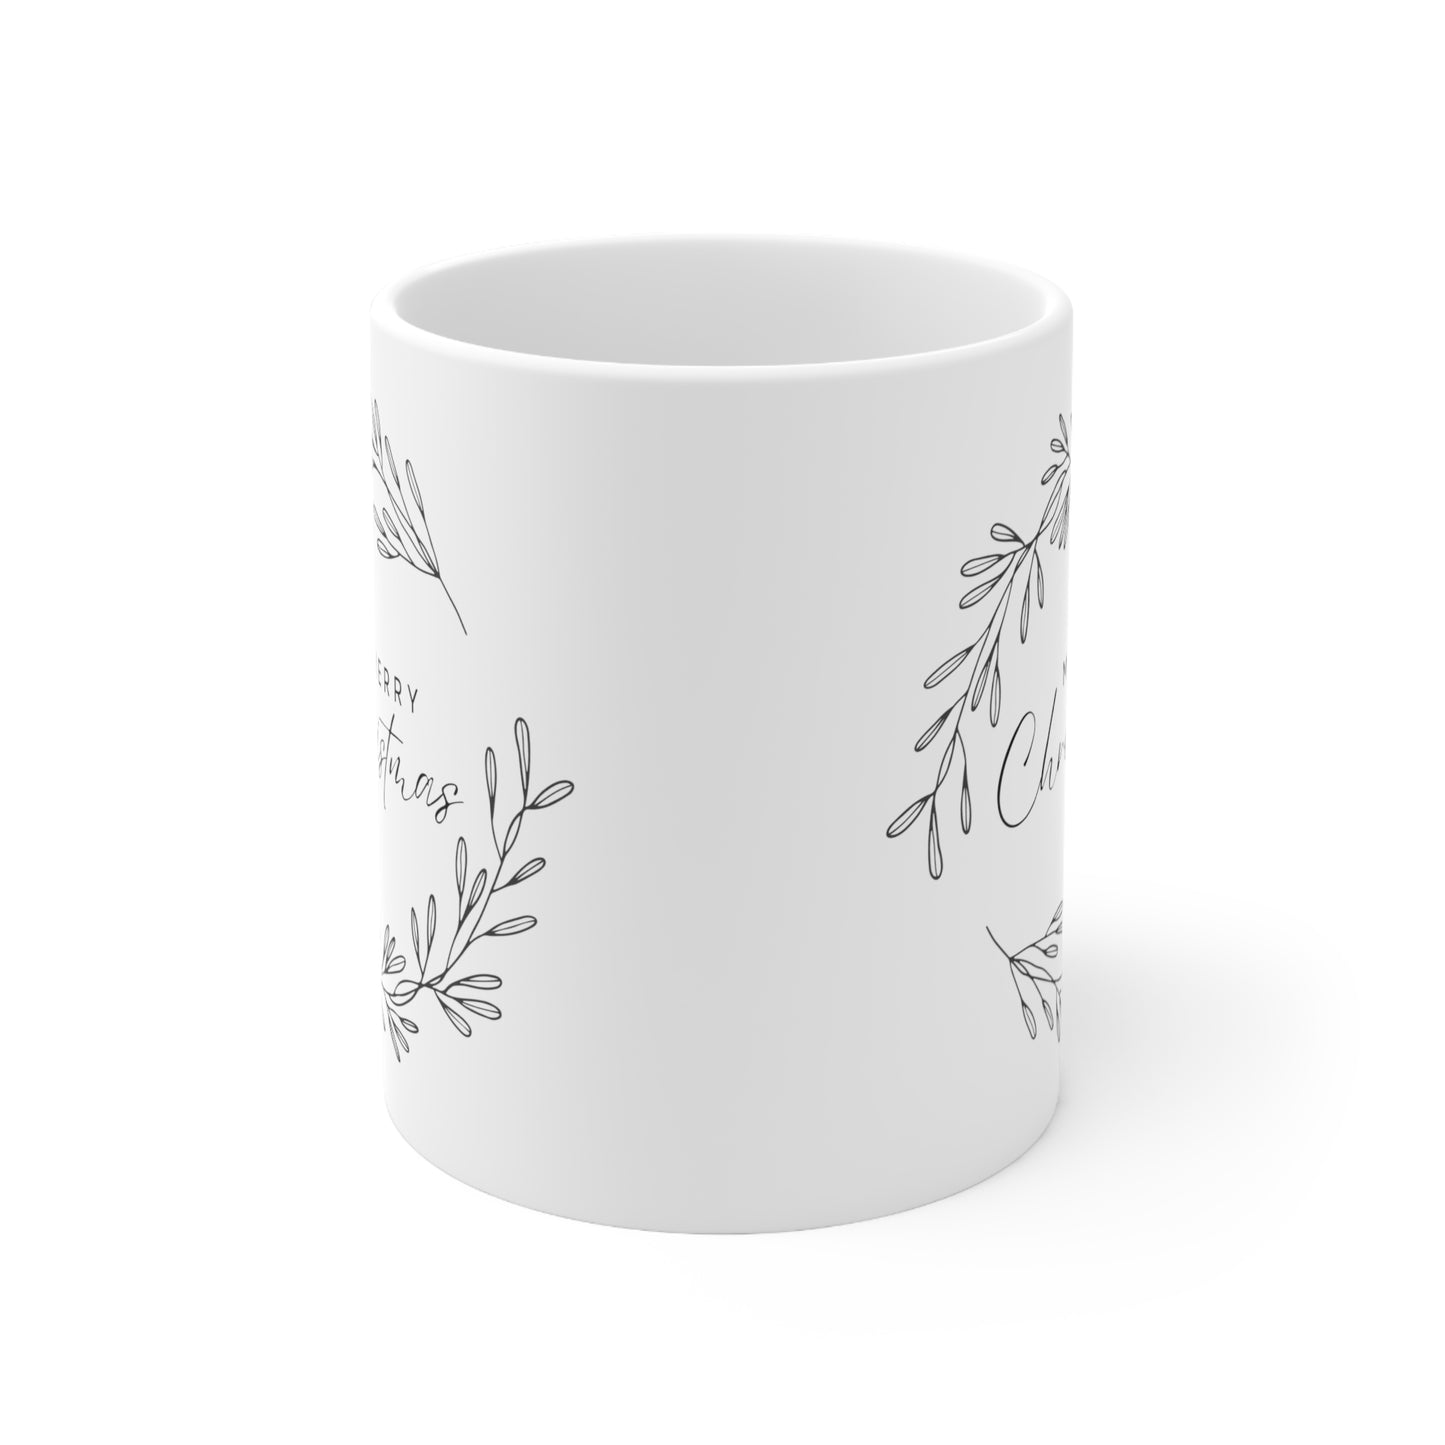 Merry Christmas with Leaves Ceramic Mug, 11oz, White